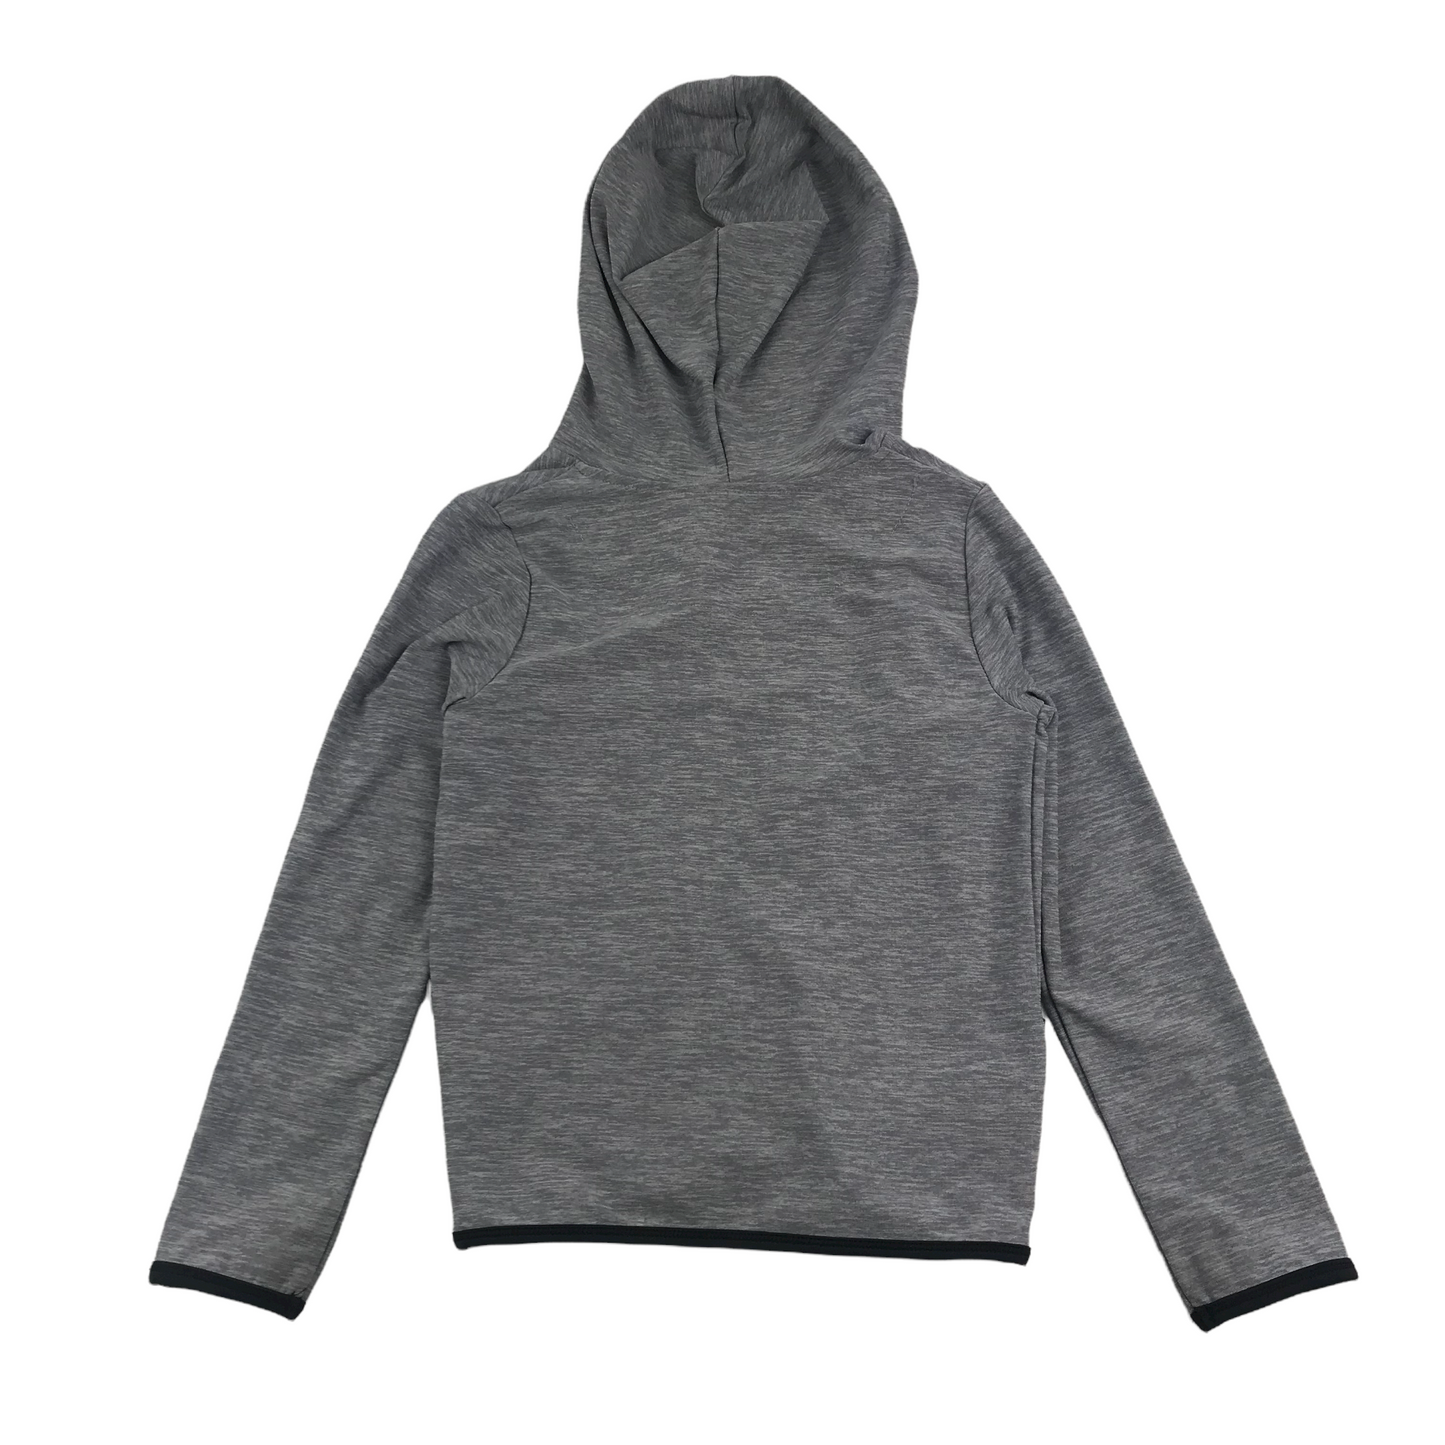 Minoti Grey Hooded Sports Sweatshirt Age 5